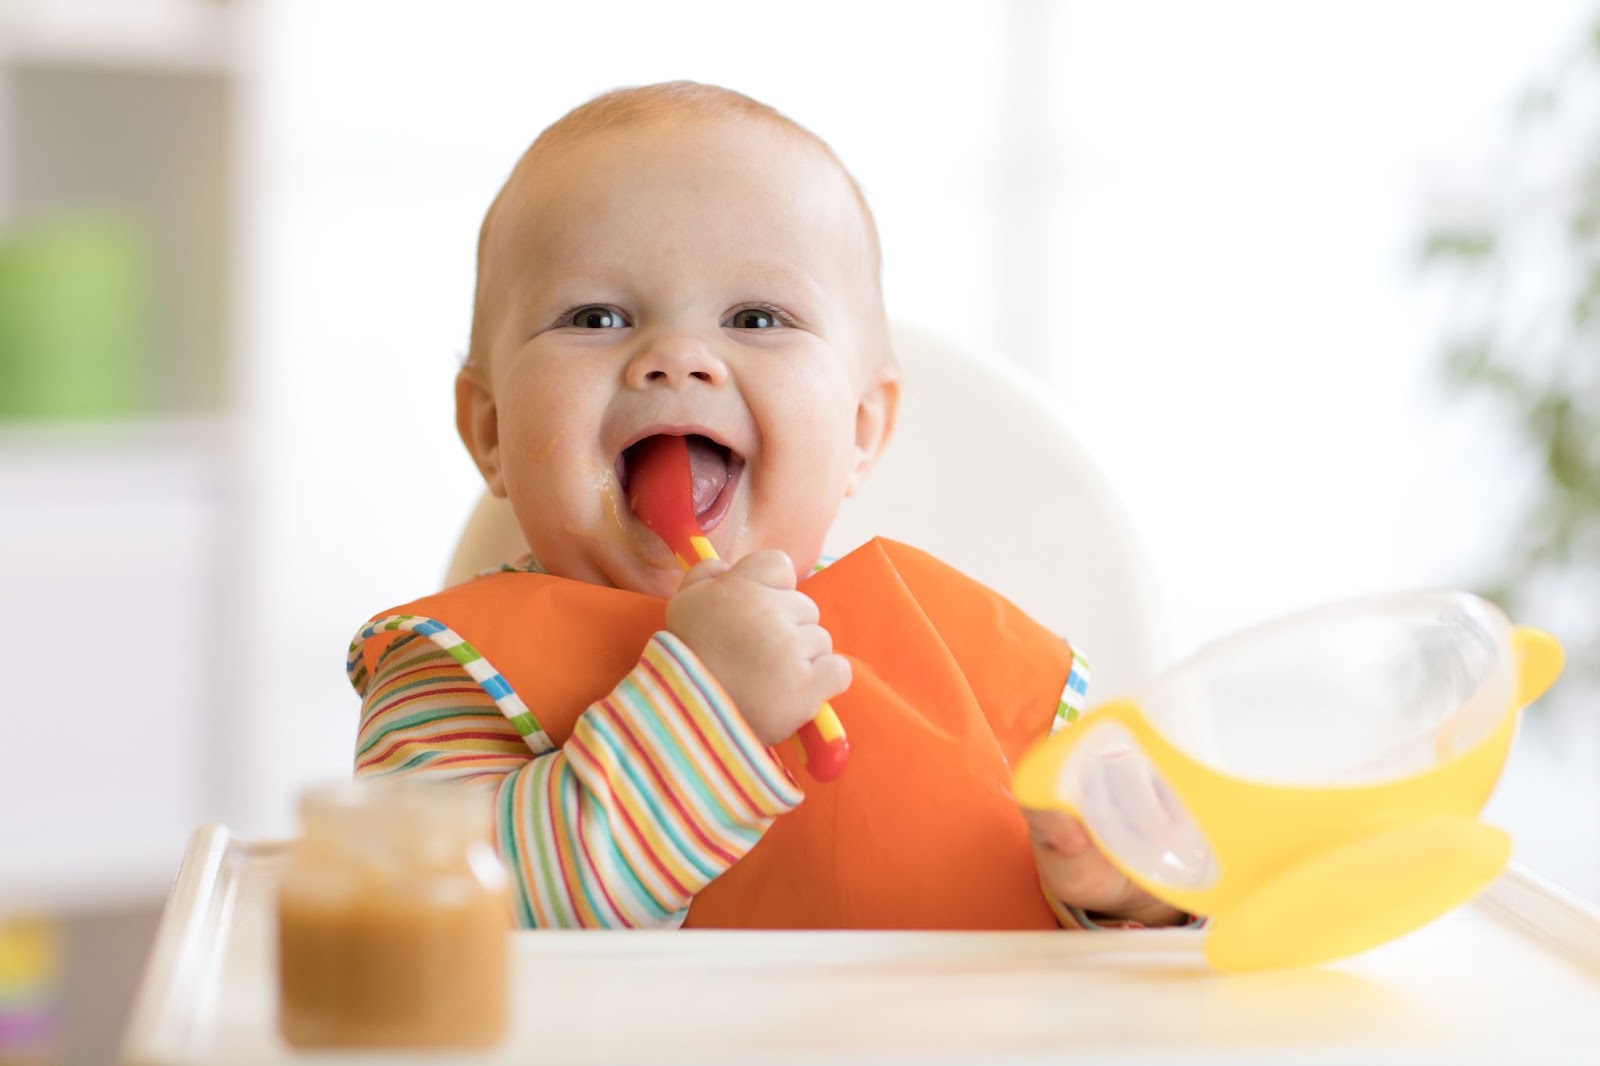 https://www.ashtonbee.com/wp-content/uploads/2021/12/baby-holding-an-orange-spoon-while-eating.jpg